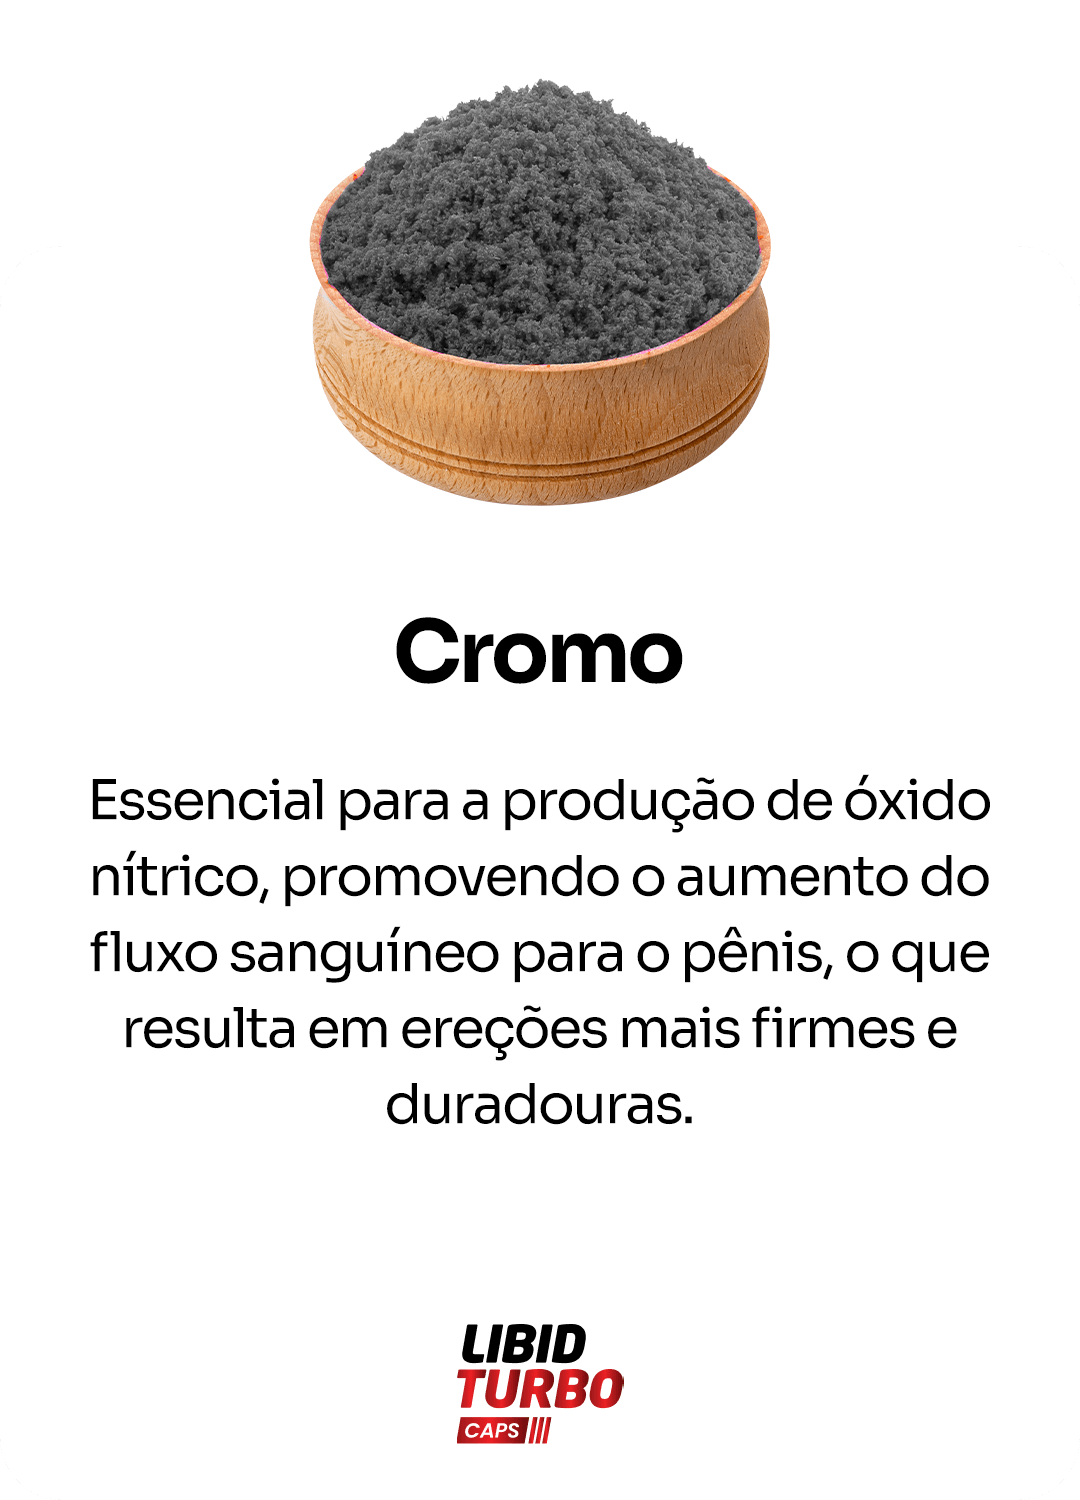 Cromo-5.png